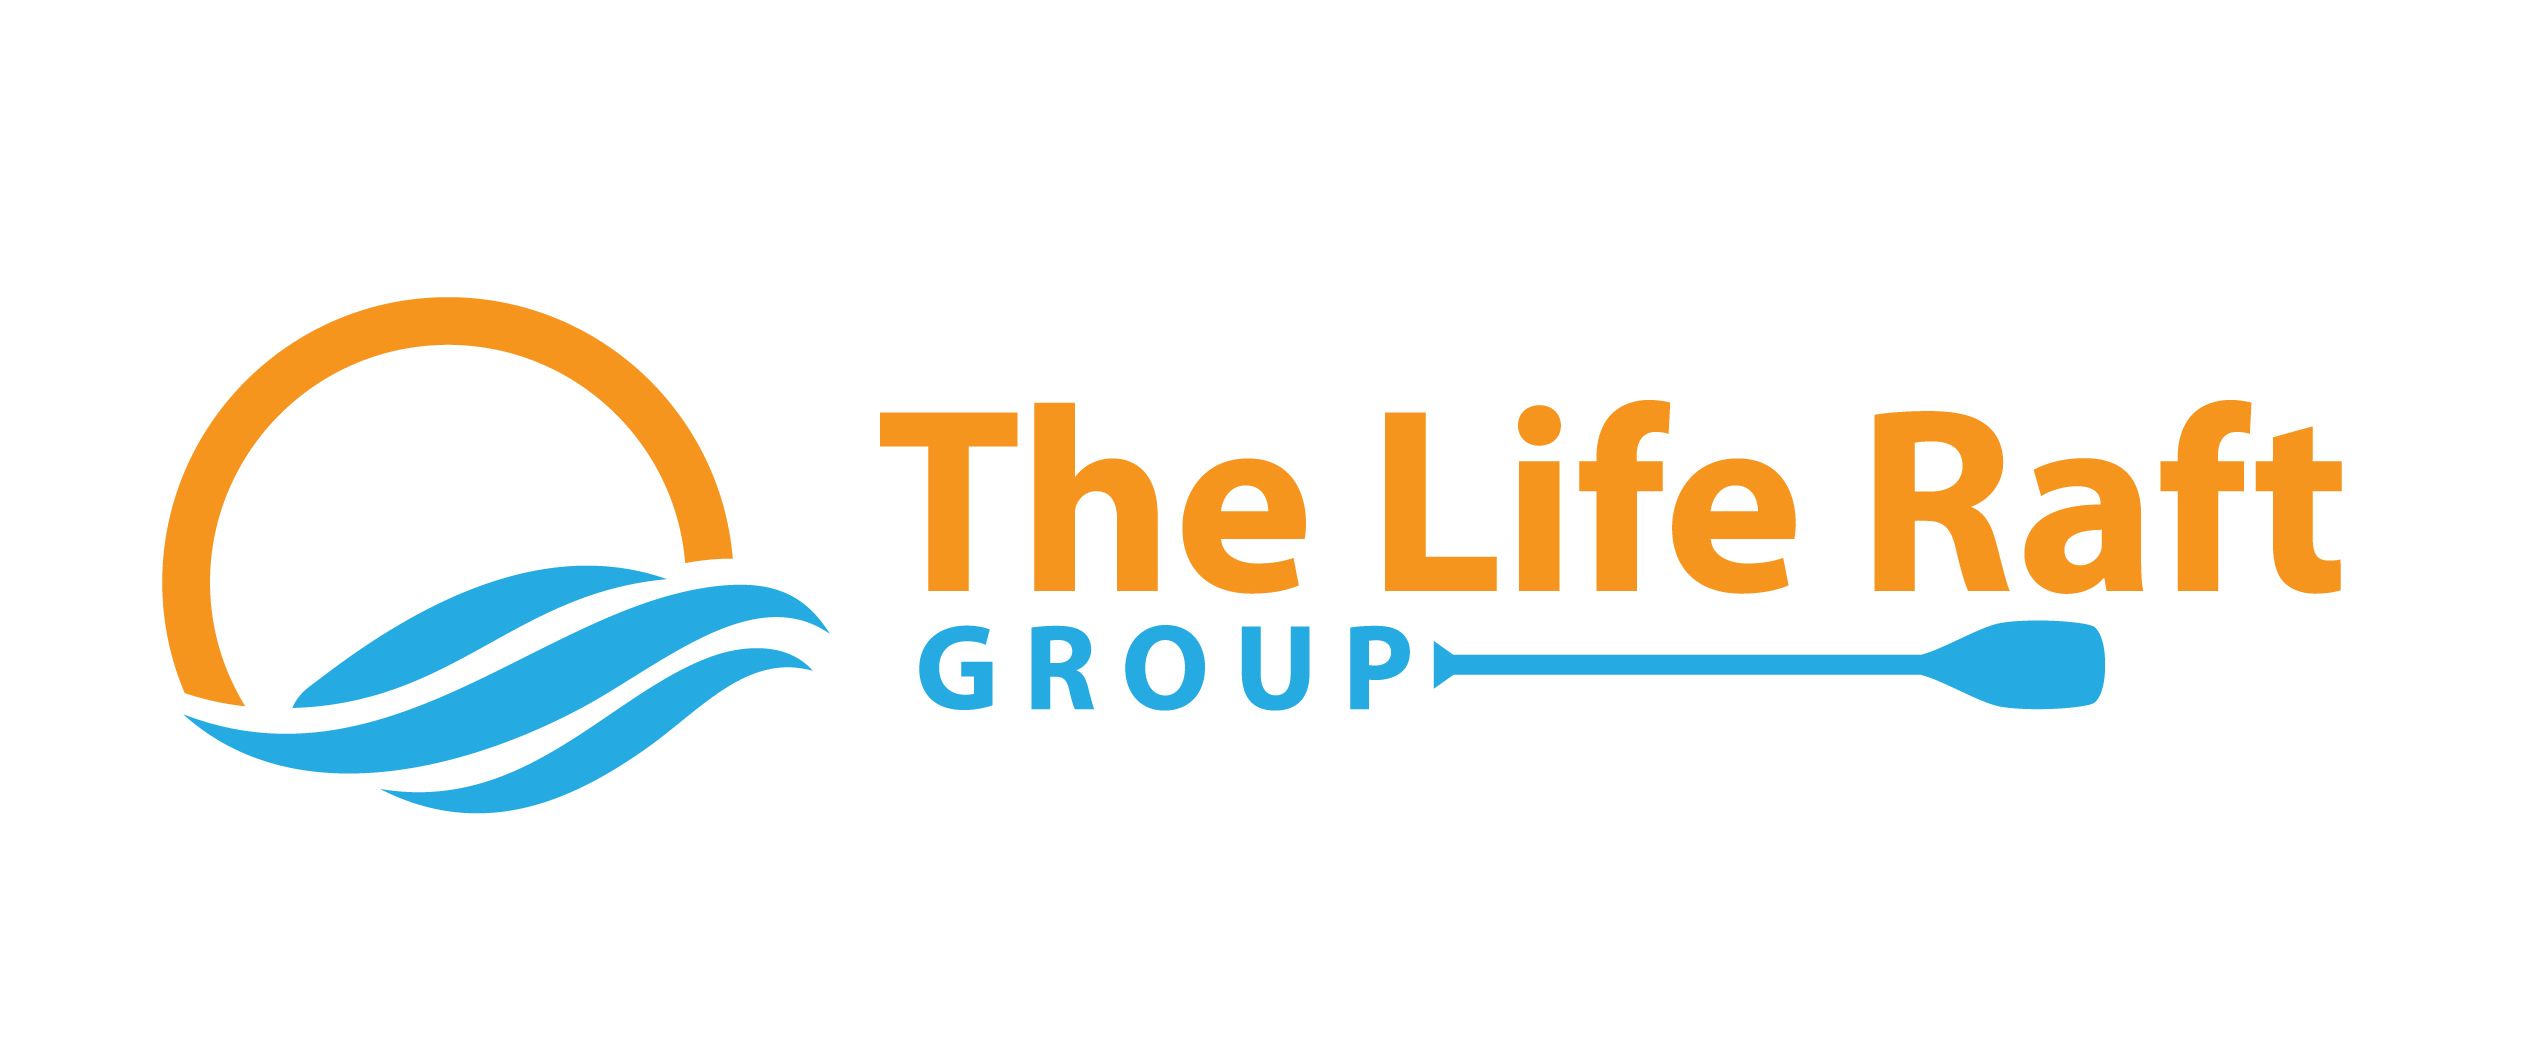 The life raft group logo